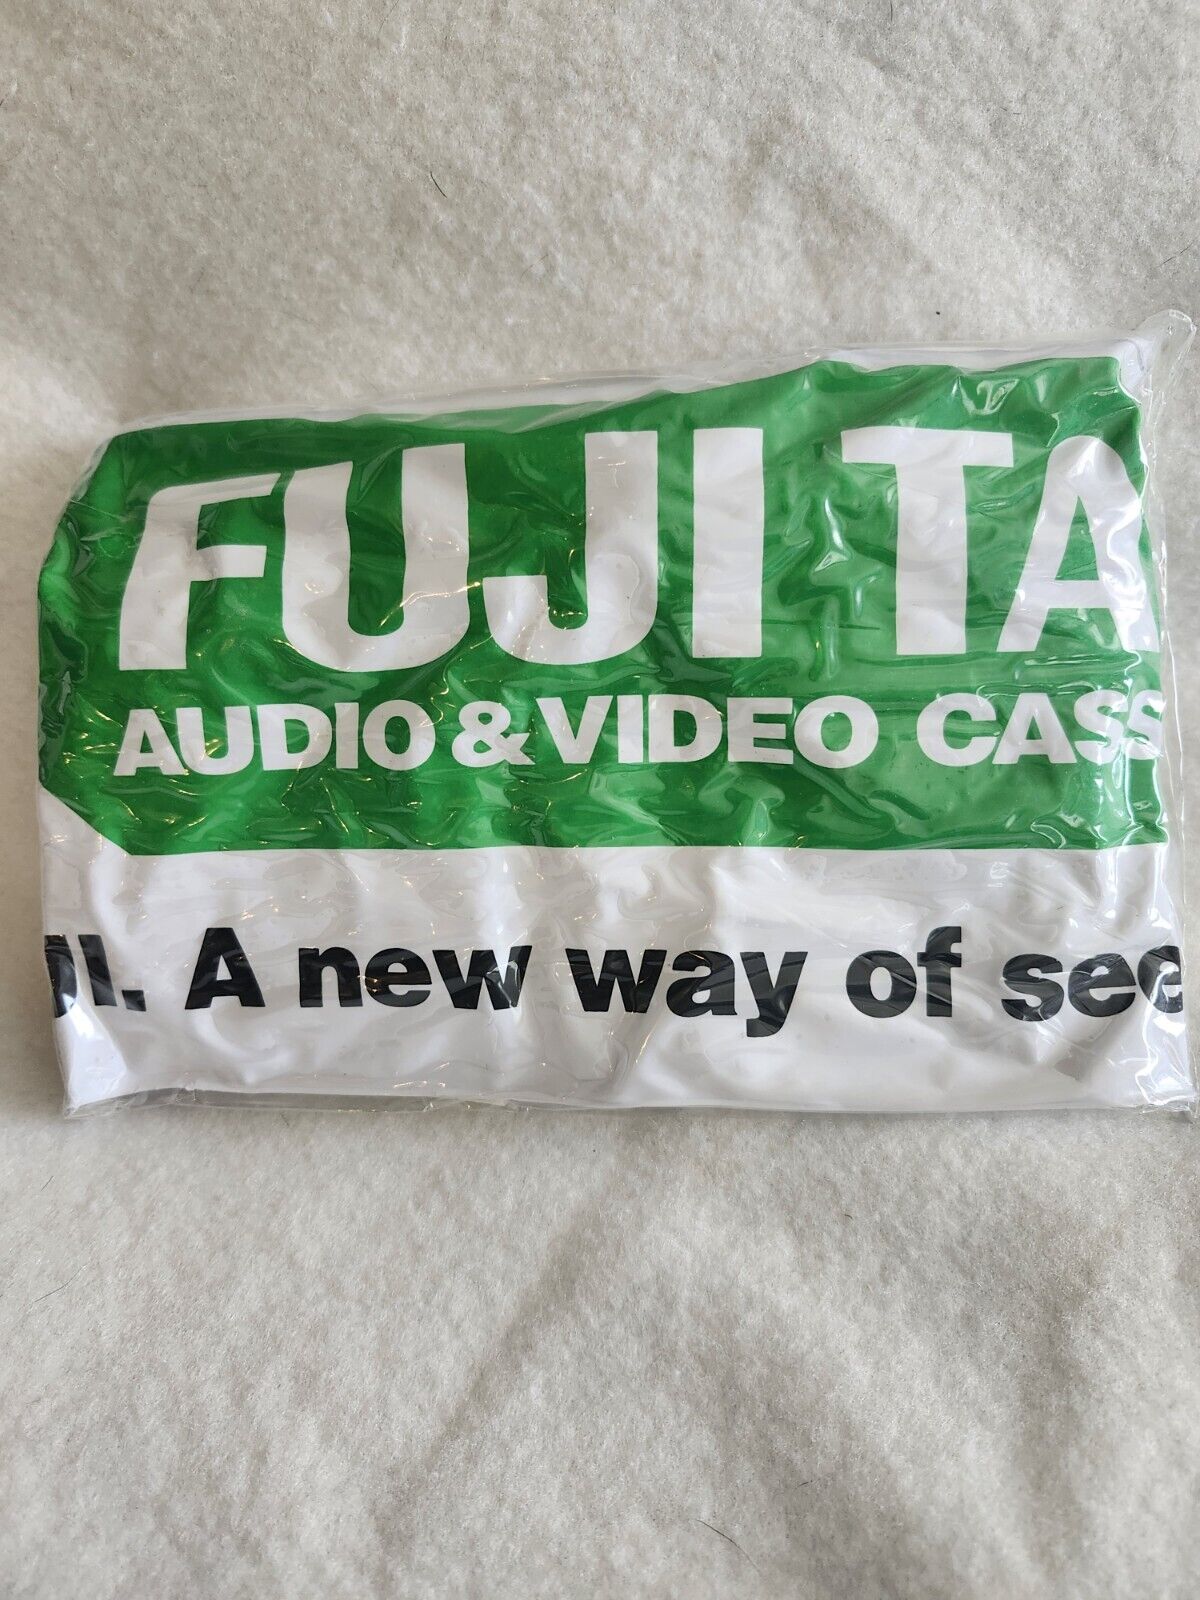 NOS Fujifilm Blimp - Fuji Tape Cassette Inflatable - Promotional Store Display